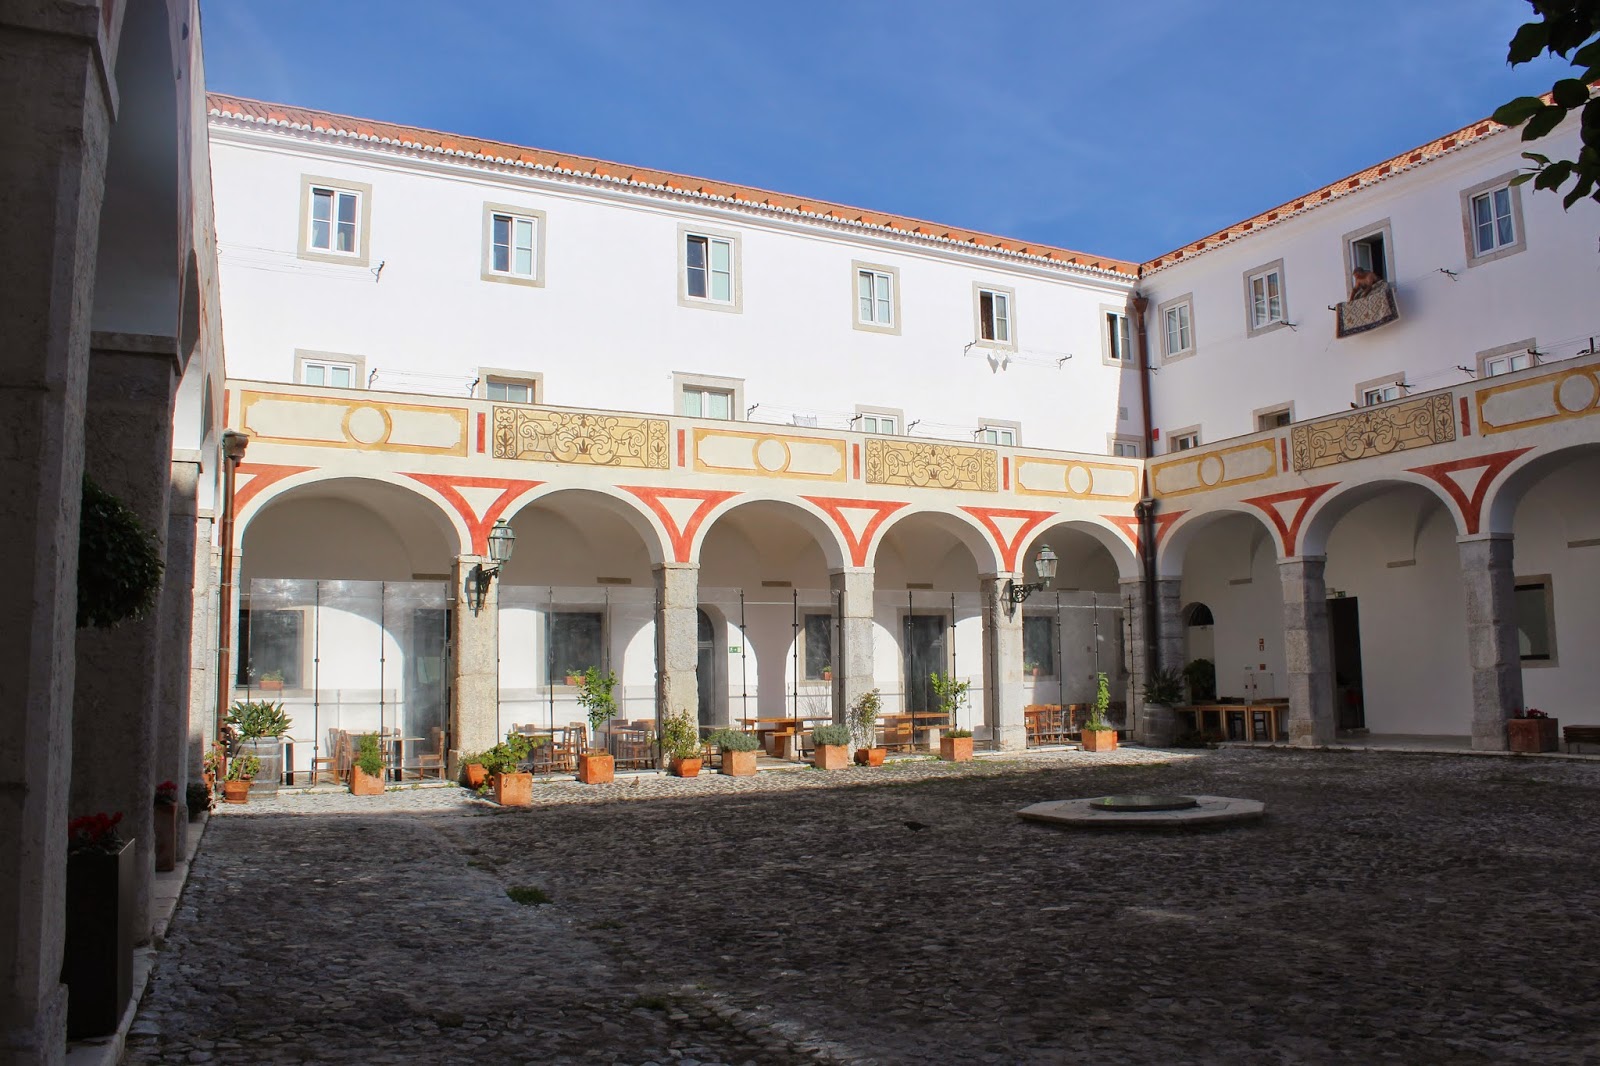 Convento das Bernardas